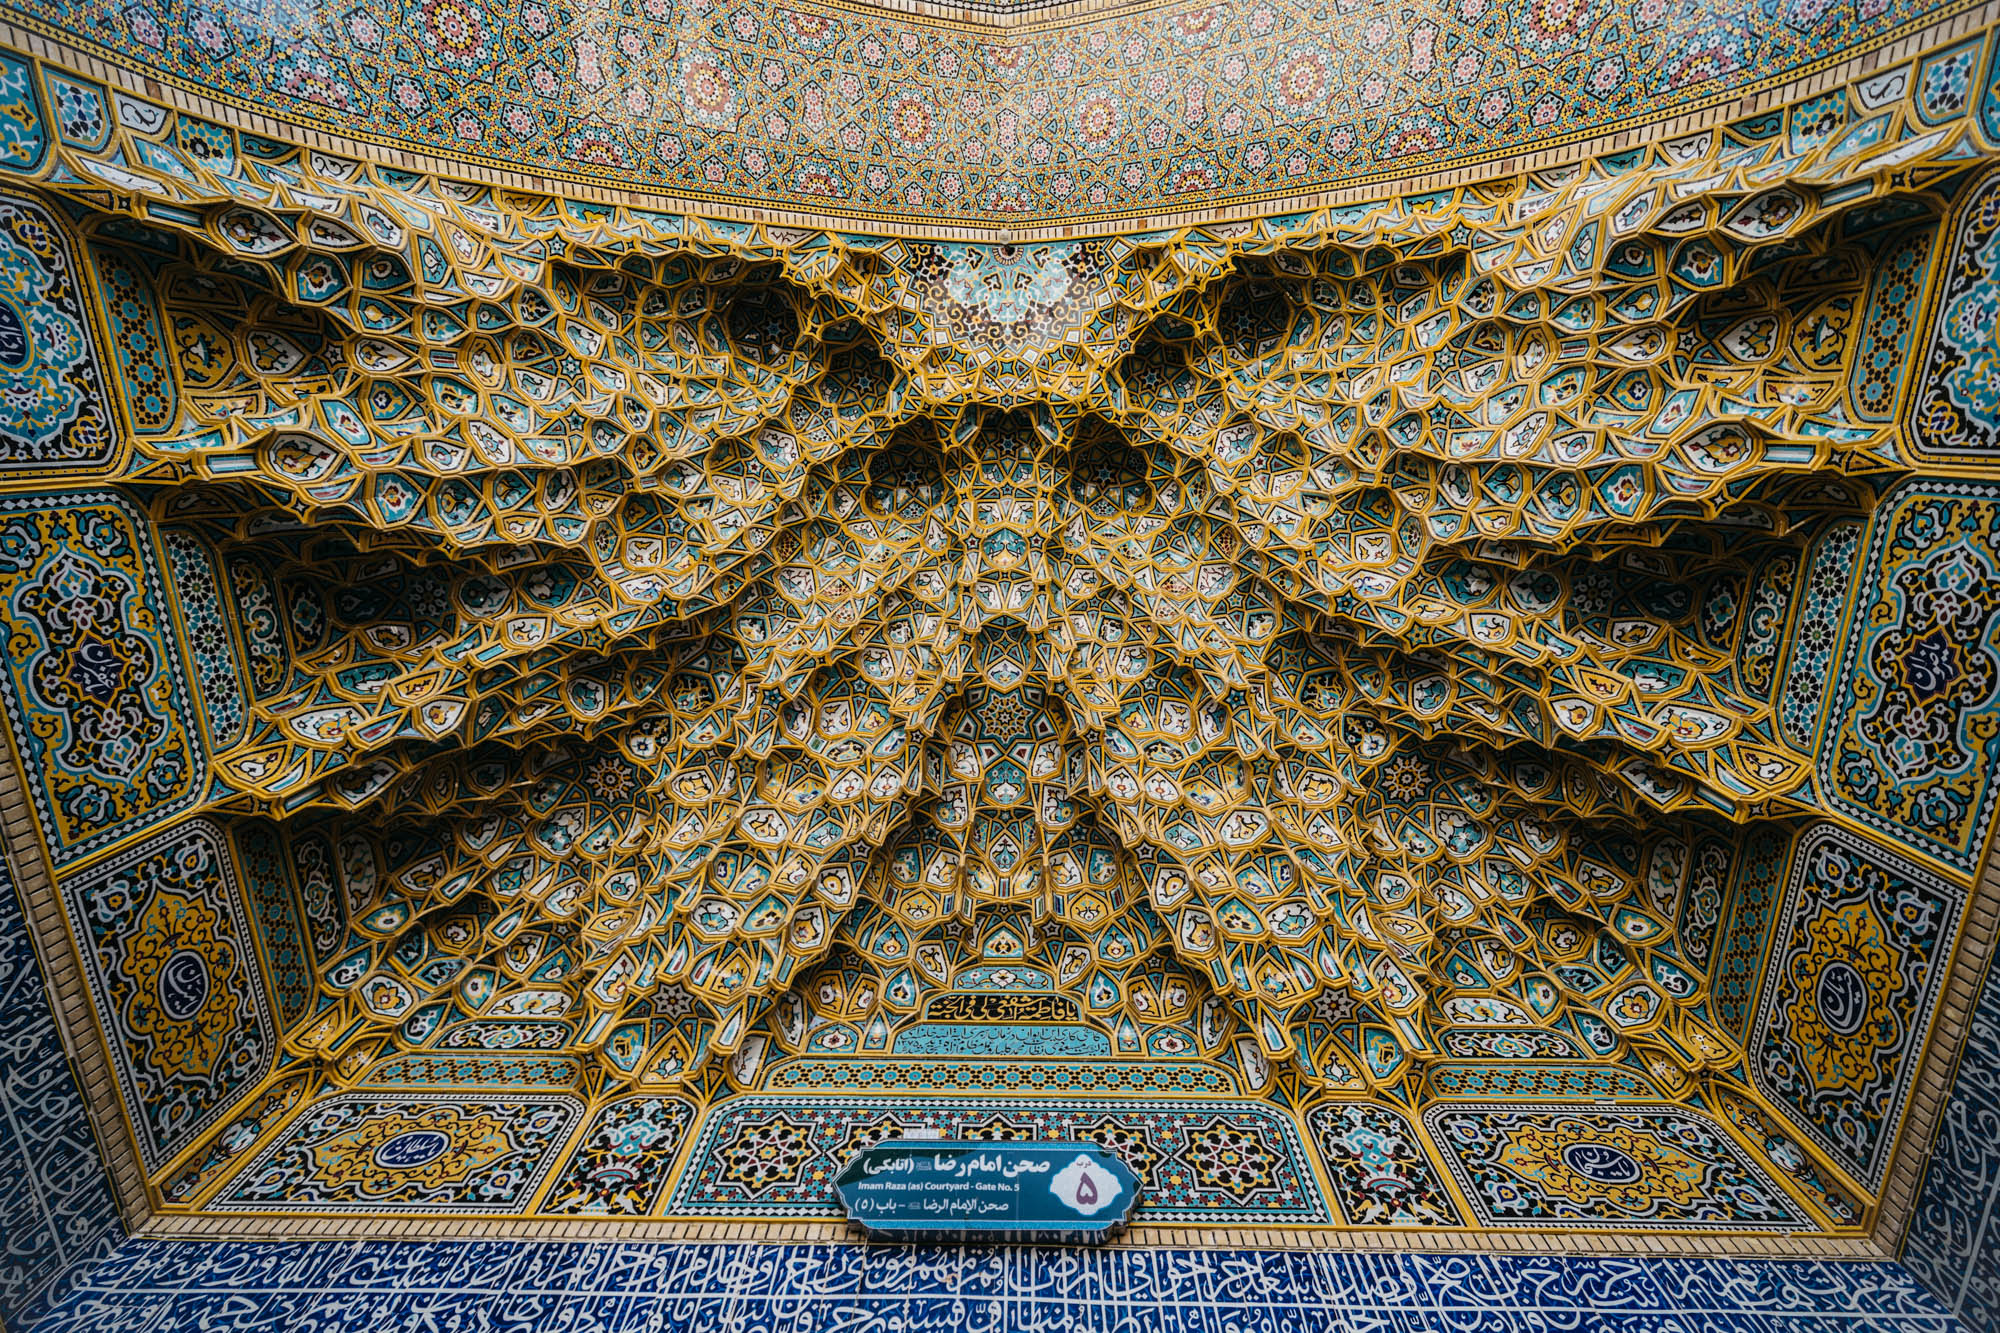 Ceiling details from the Shrine of Fatima Masumeh, Qom.